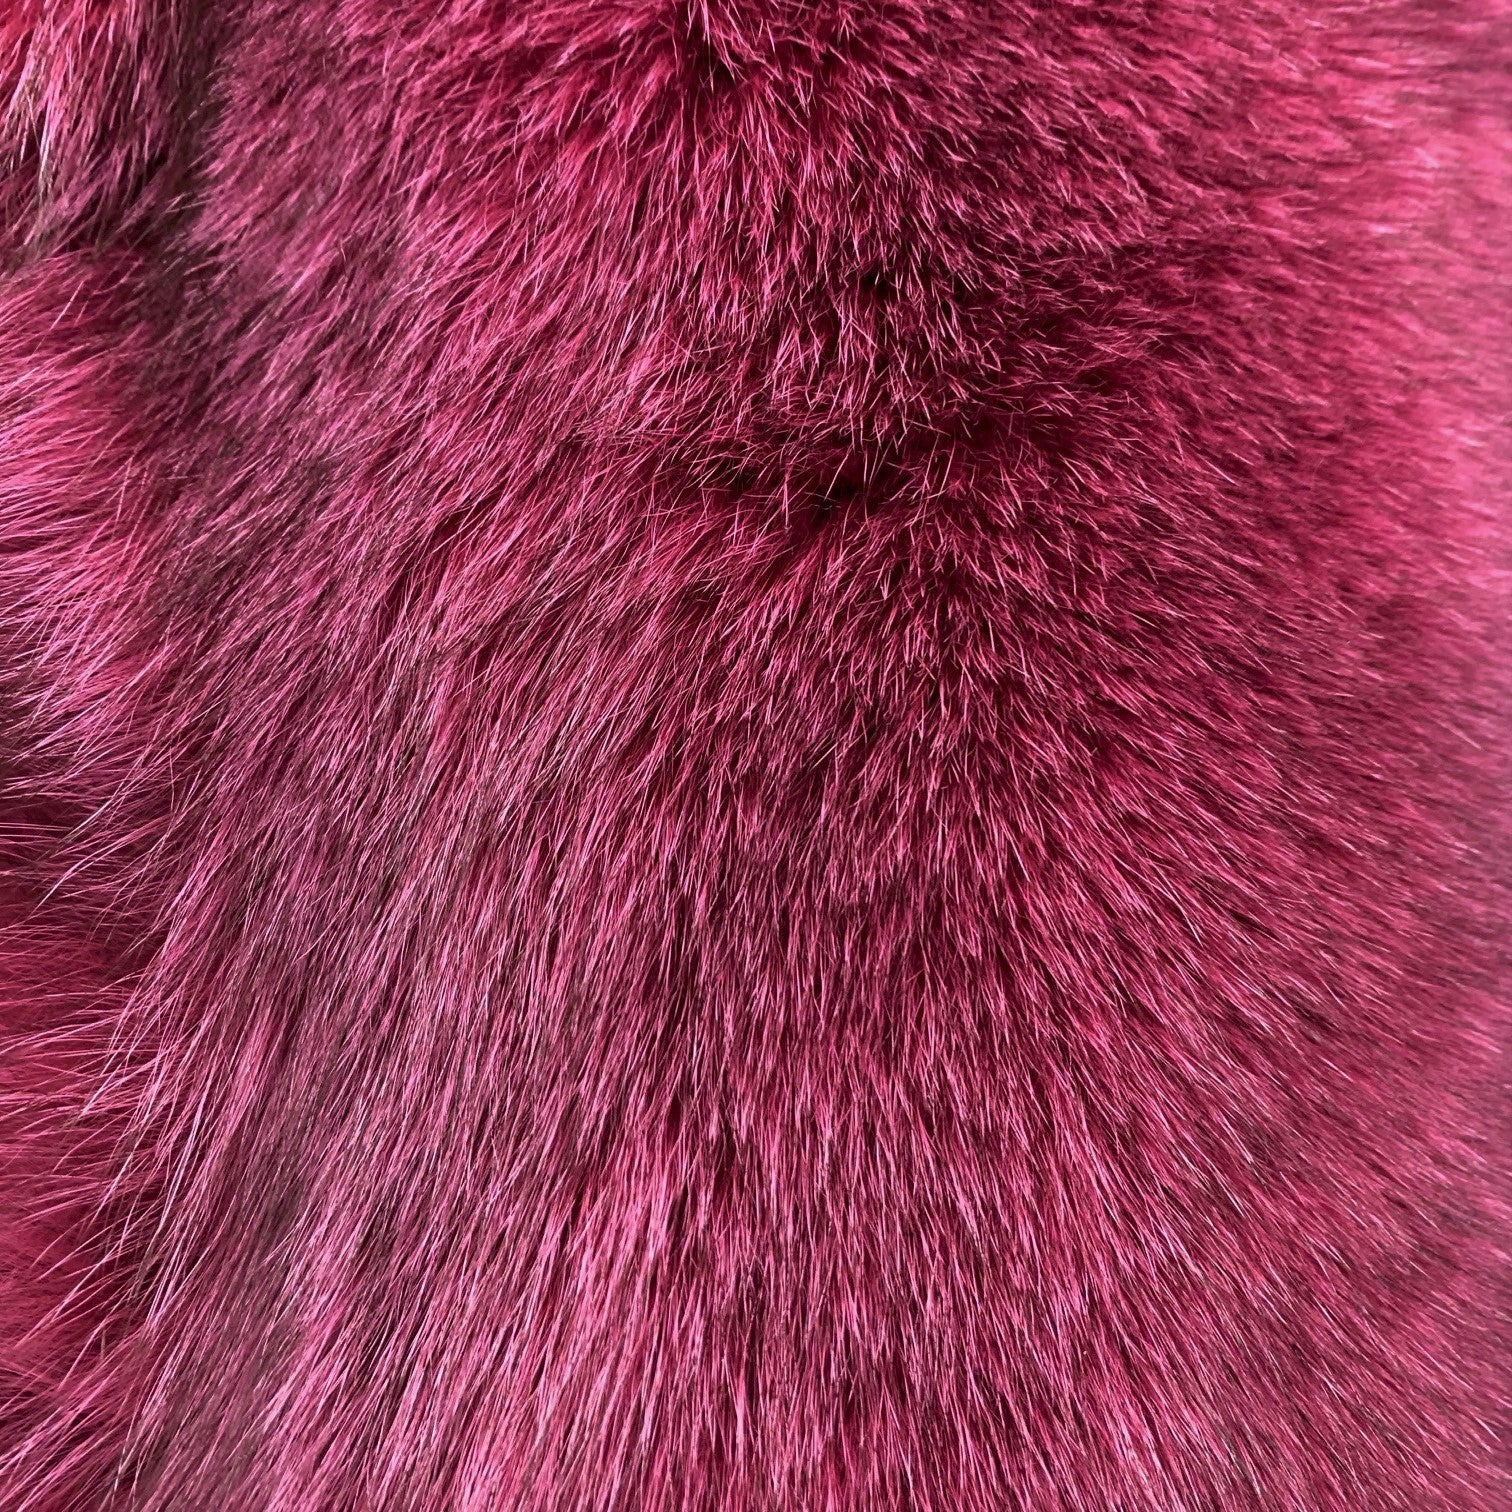 Dyed Shadow Fox Fur - Raspberry